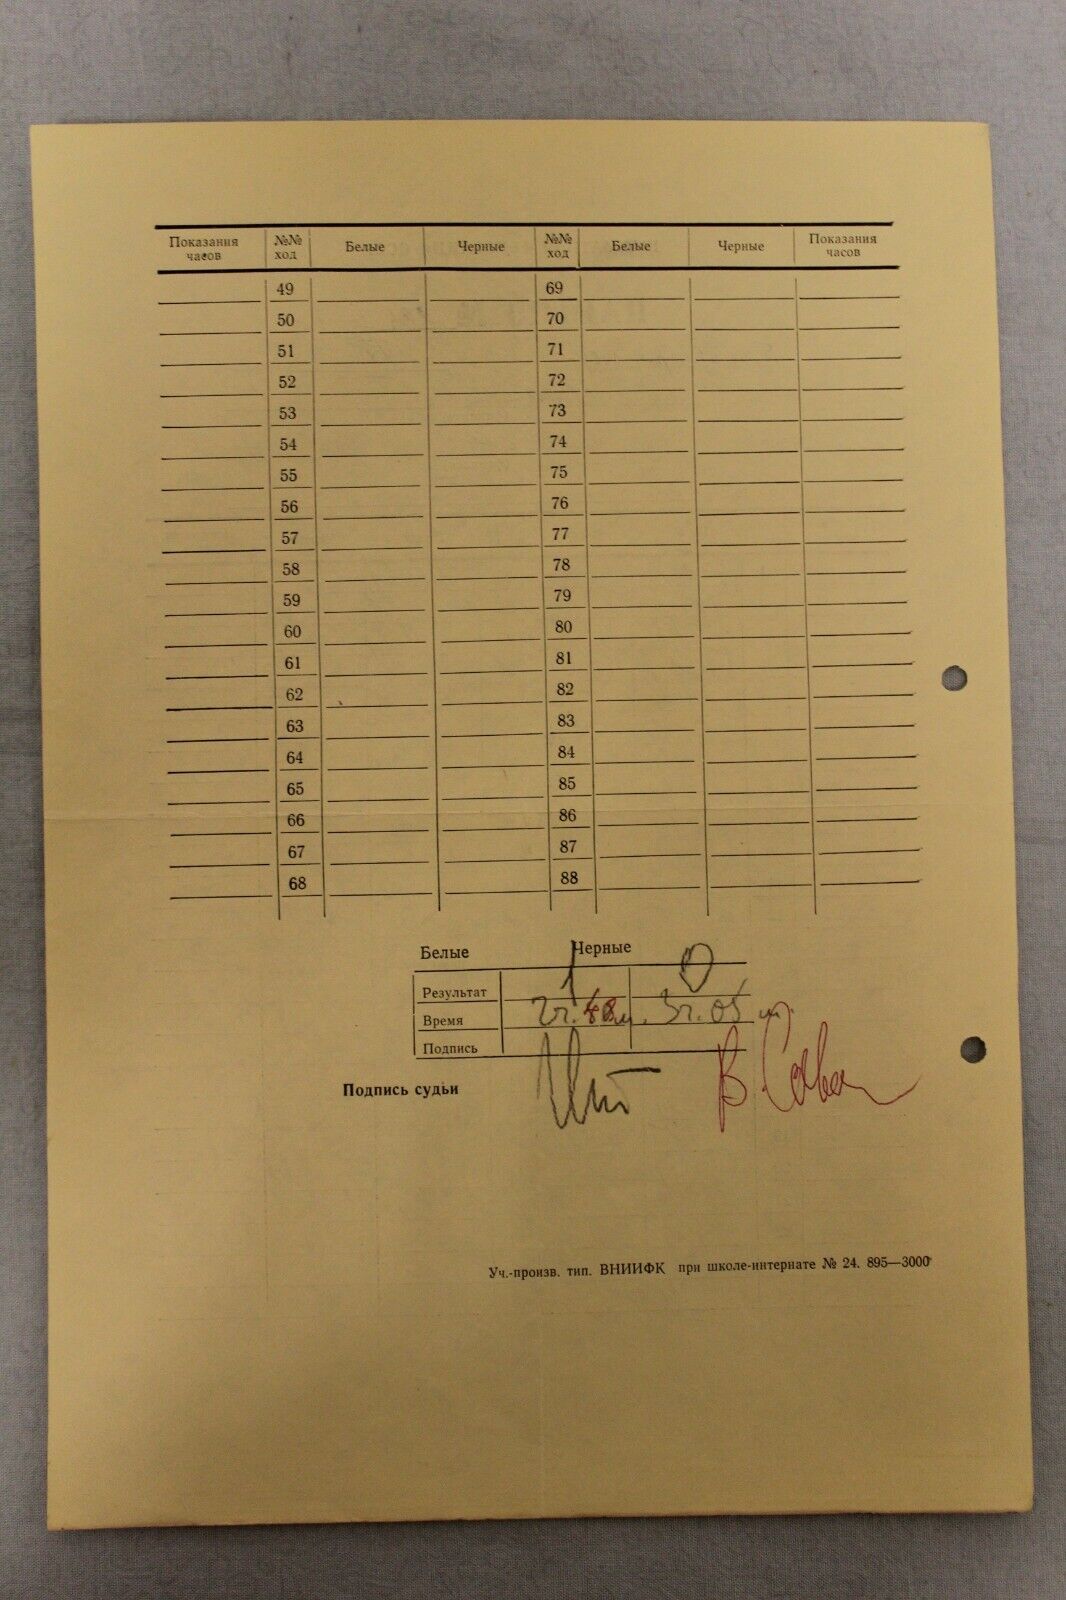 11864.Soviet Score Sheet. Platonov-Savon. 37th USSR Chess Championship. 1969